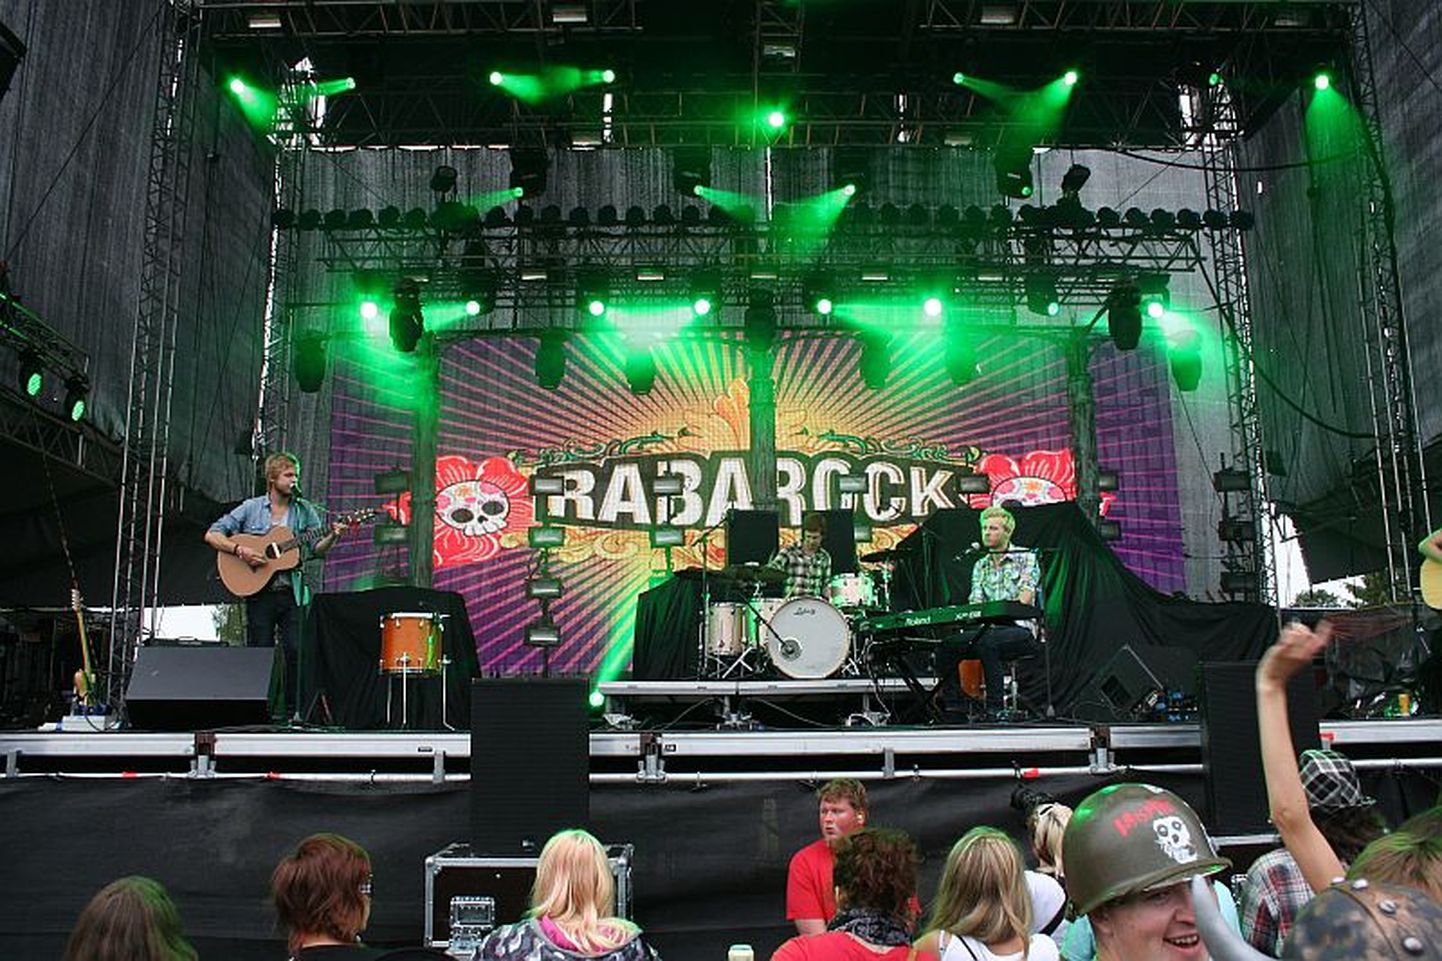 Rabarock 2011